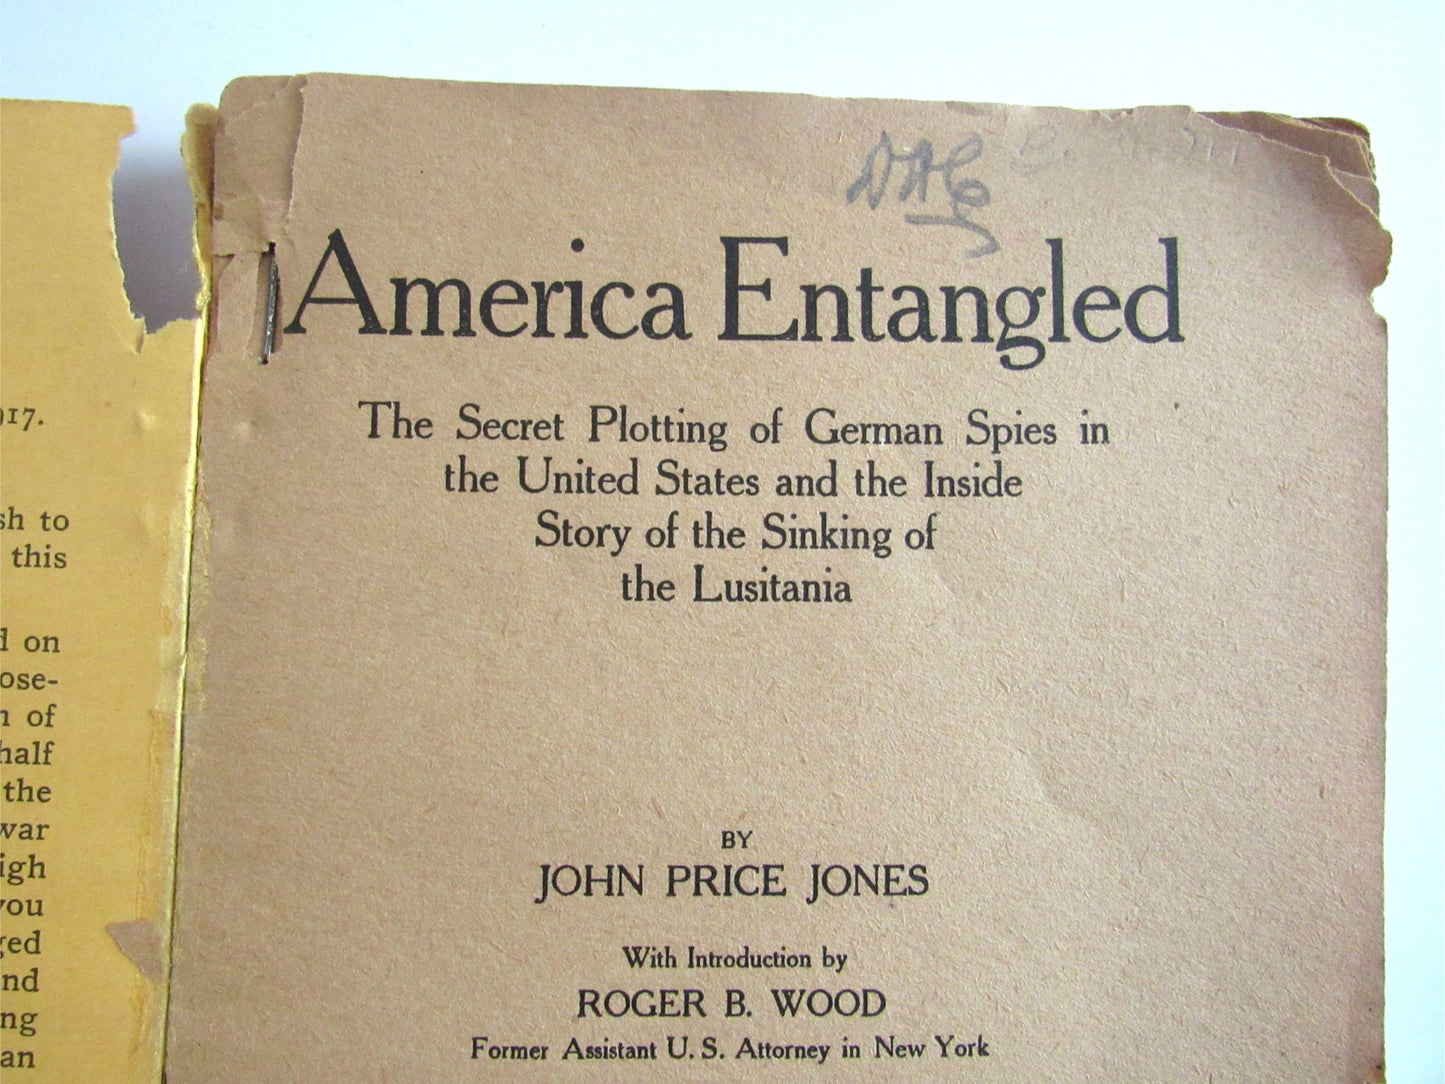 RARE Antique 1917 "America Entangled" by John Price Jones WWI German Spies Book